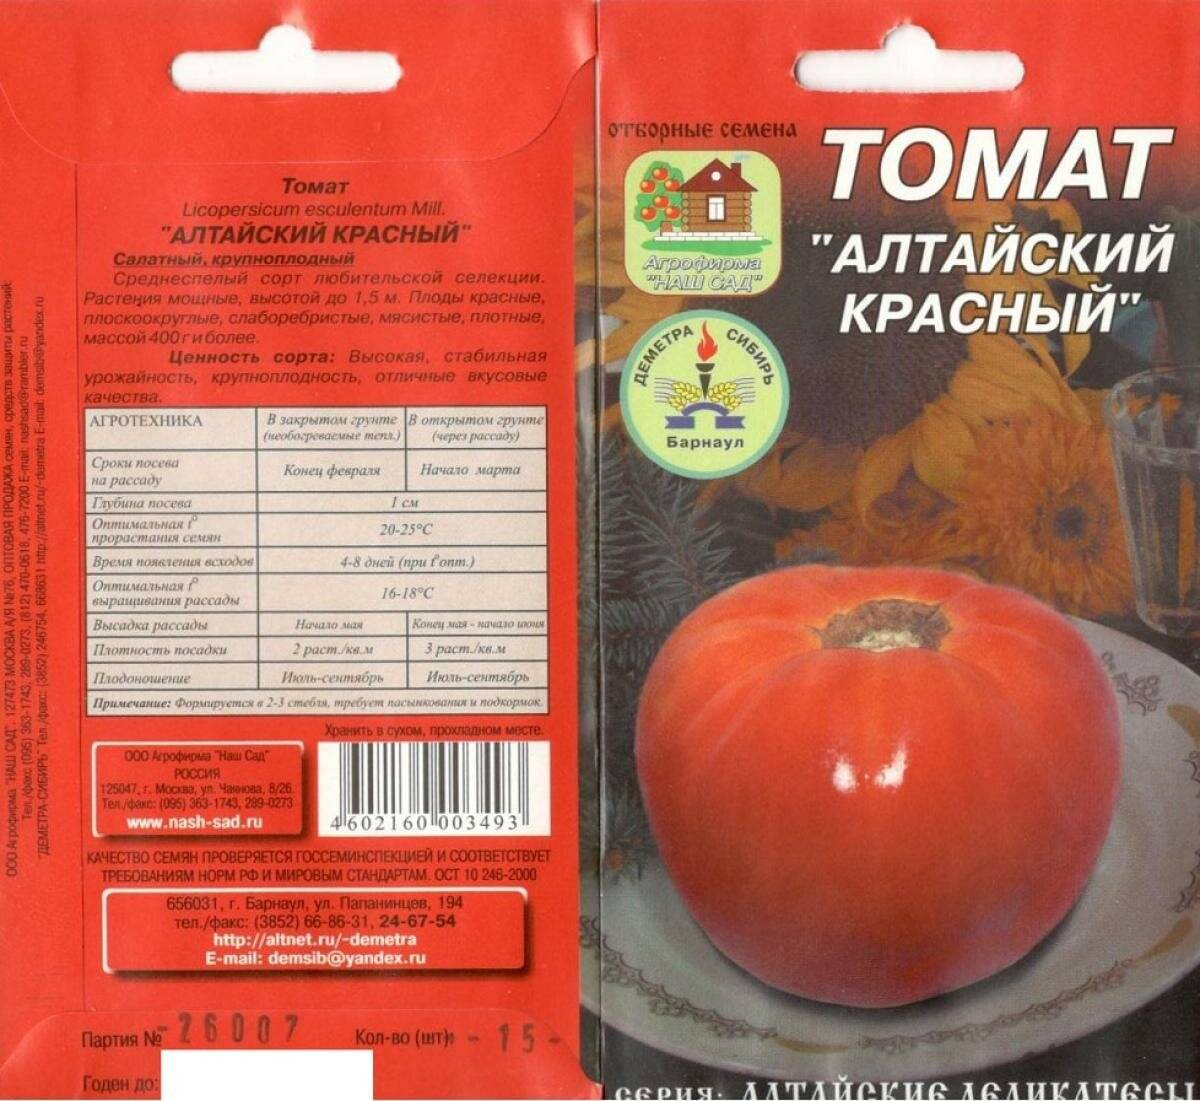 Характеристика и описание томата сорта «спрут f1»: выращивание в открытом грунте